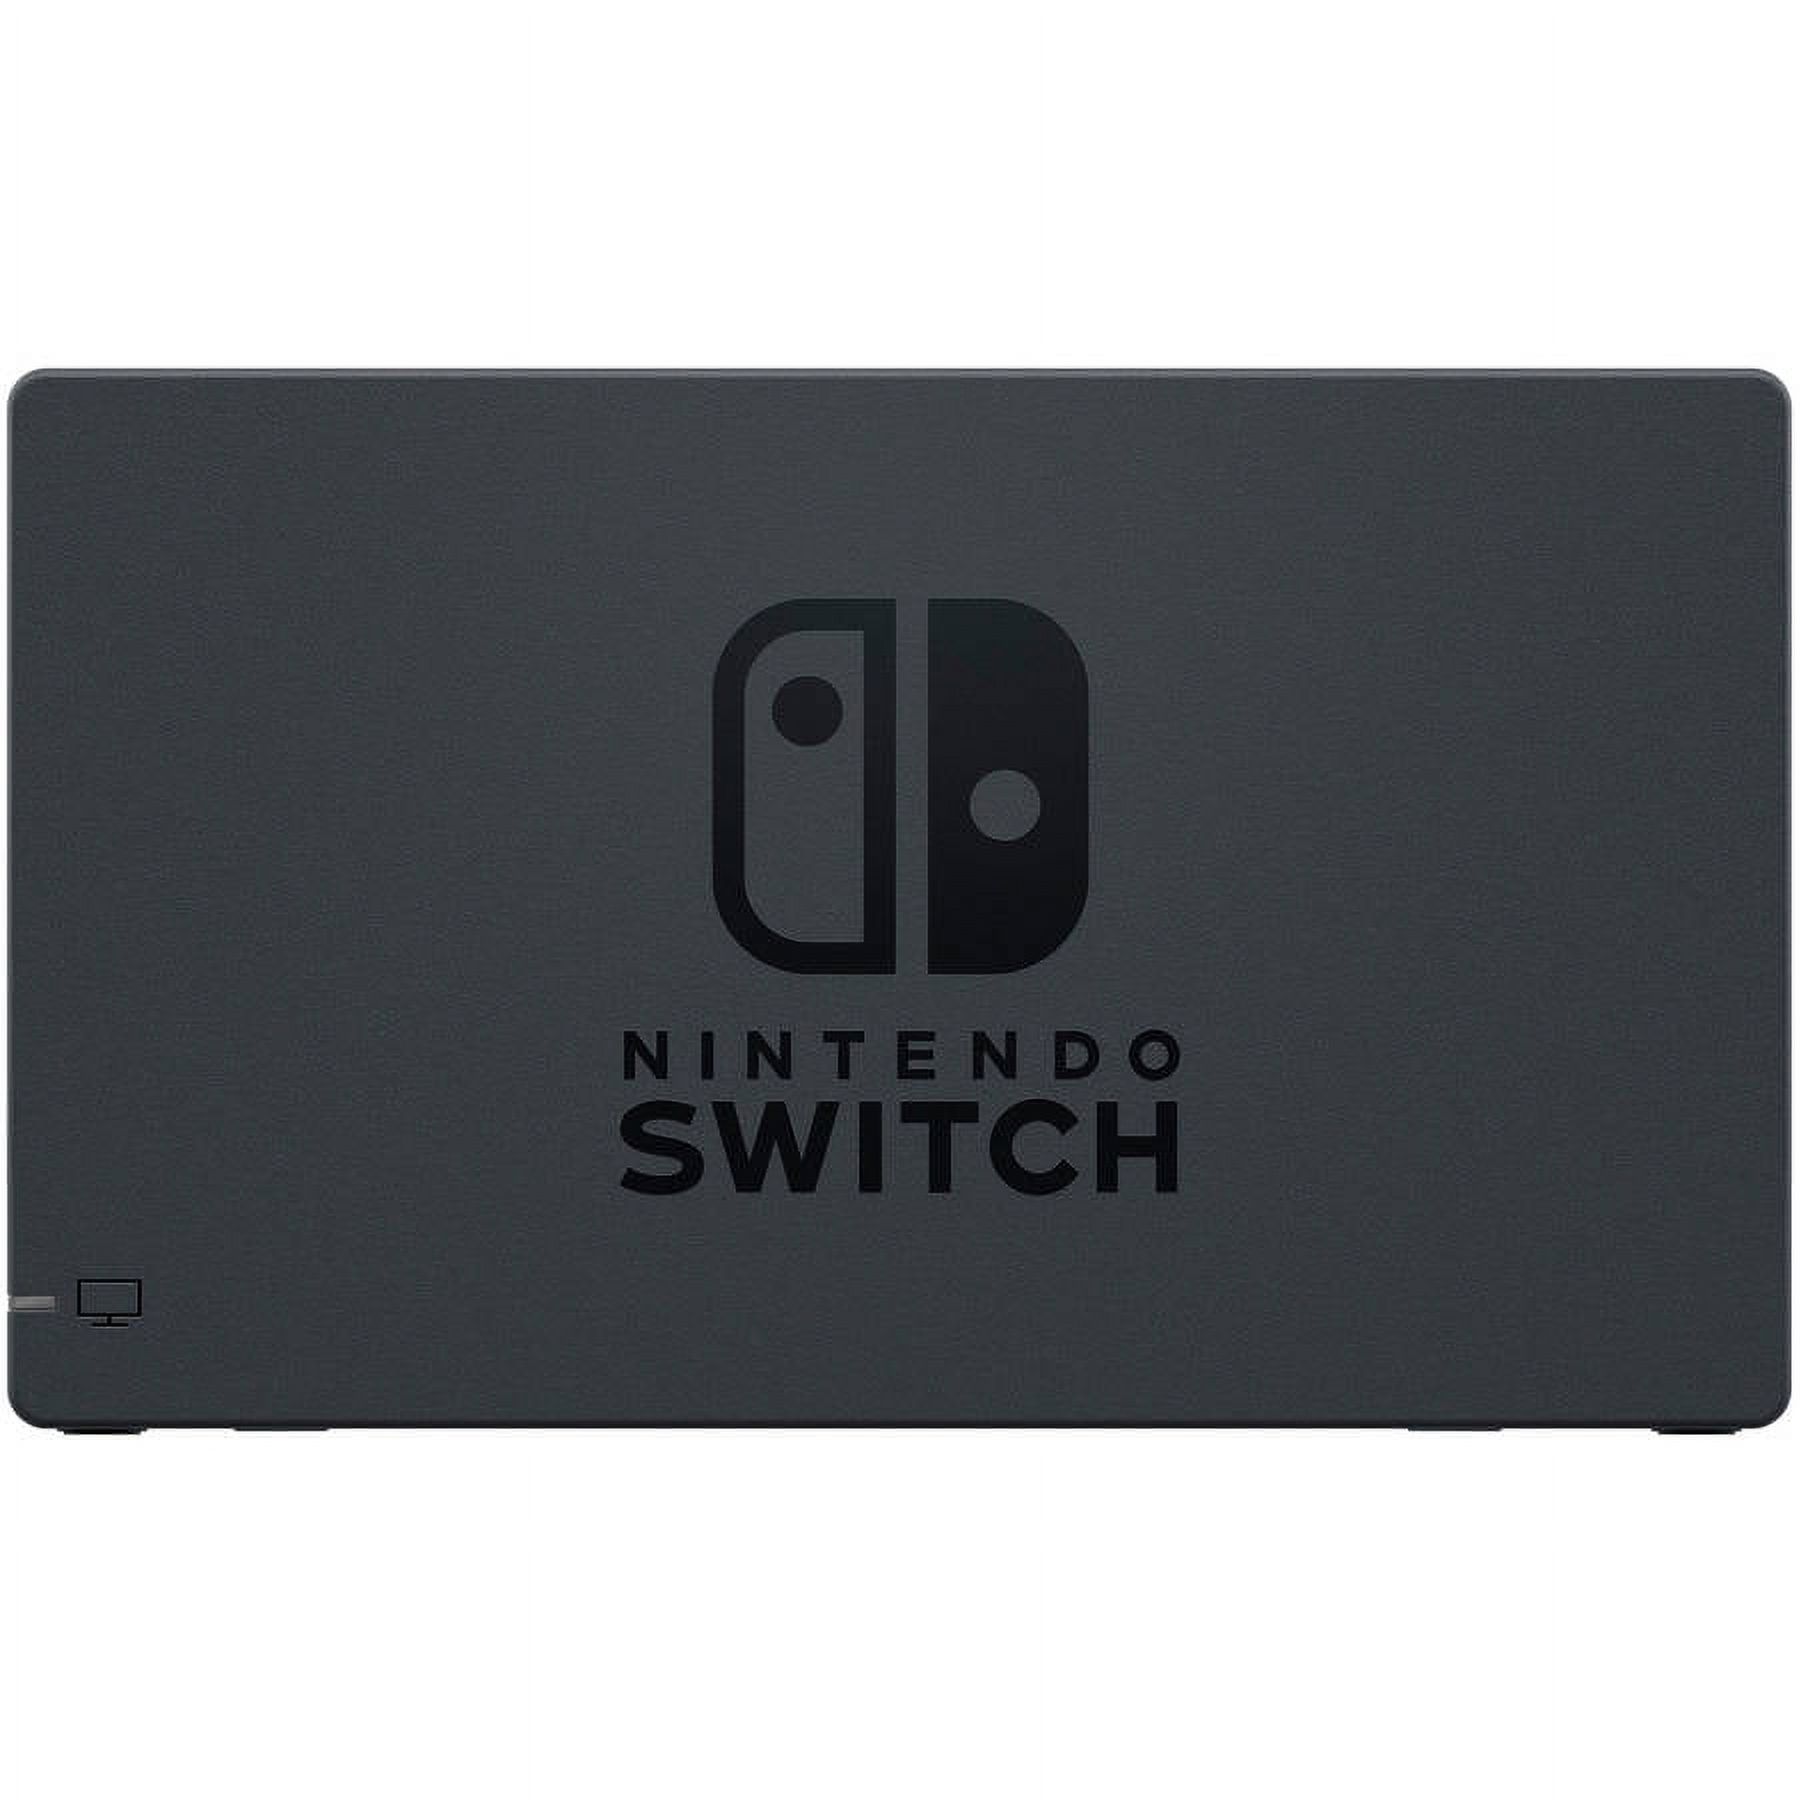 Nintendo Switch Dock Set, HACACASAA - image 2 of 4